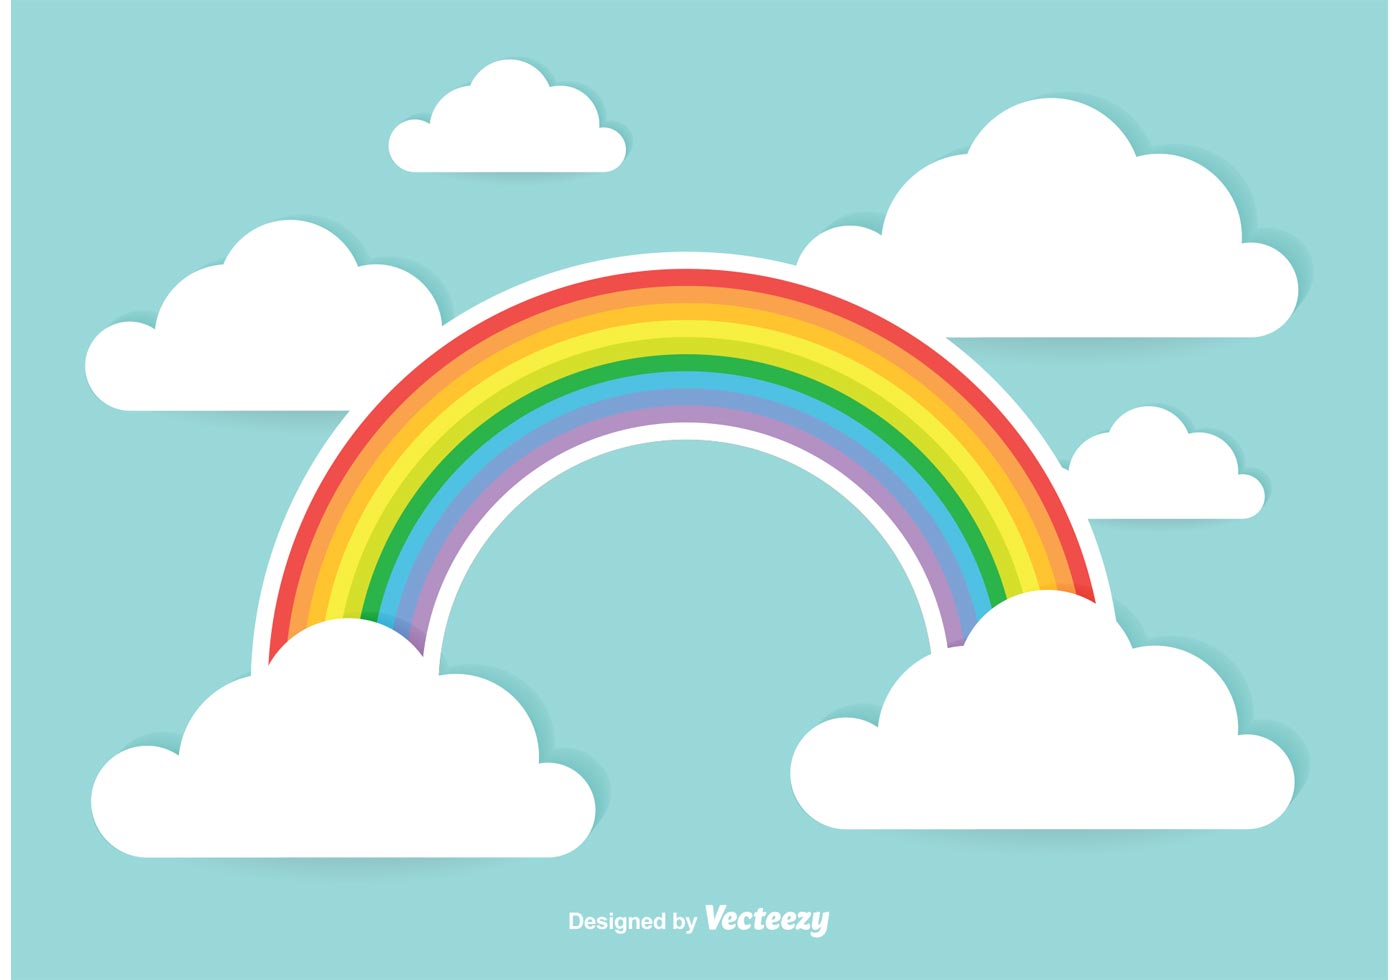 free vector rainbow clipart - photo #26